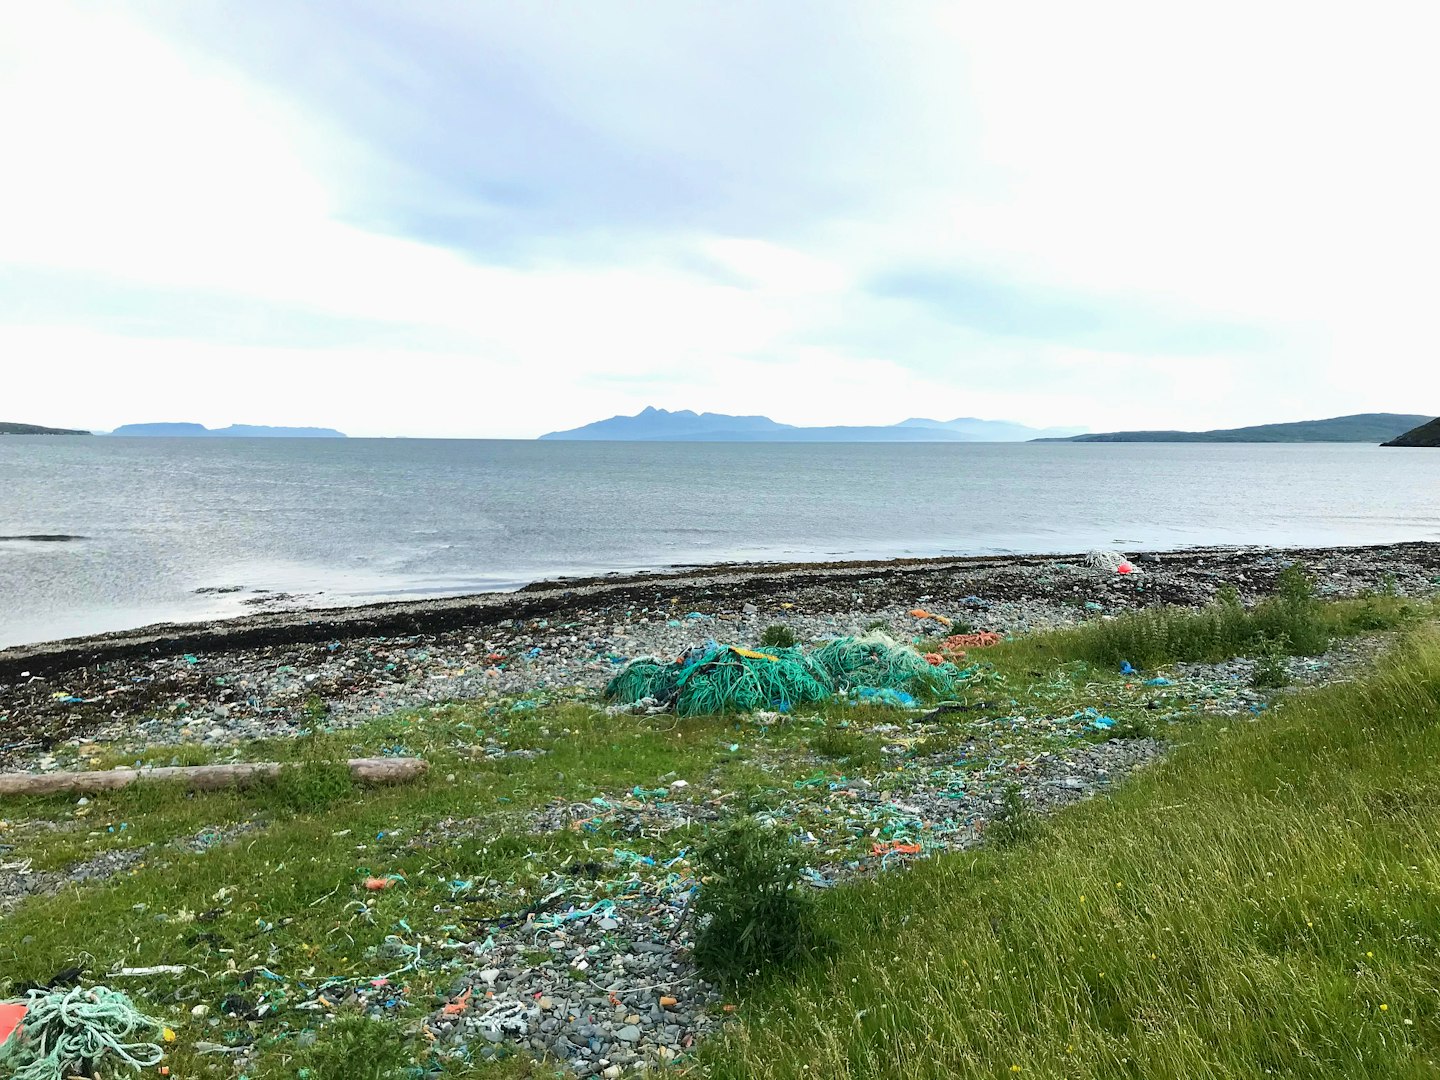 human pollution on a Scottish beach